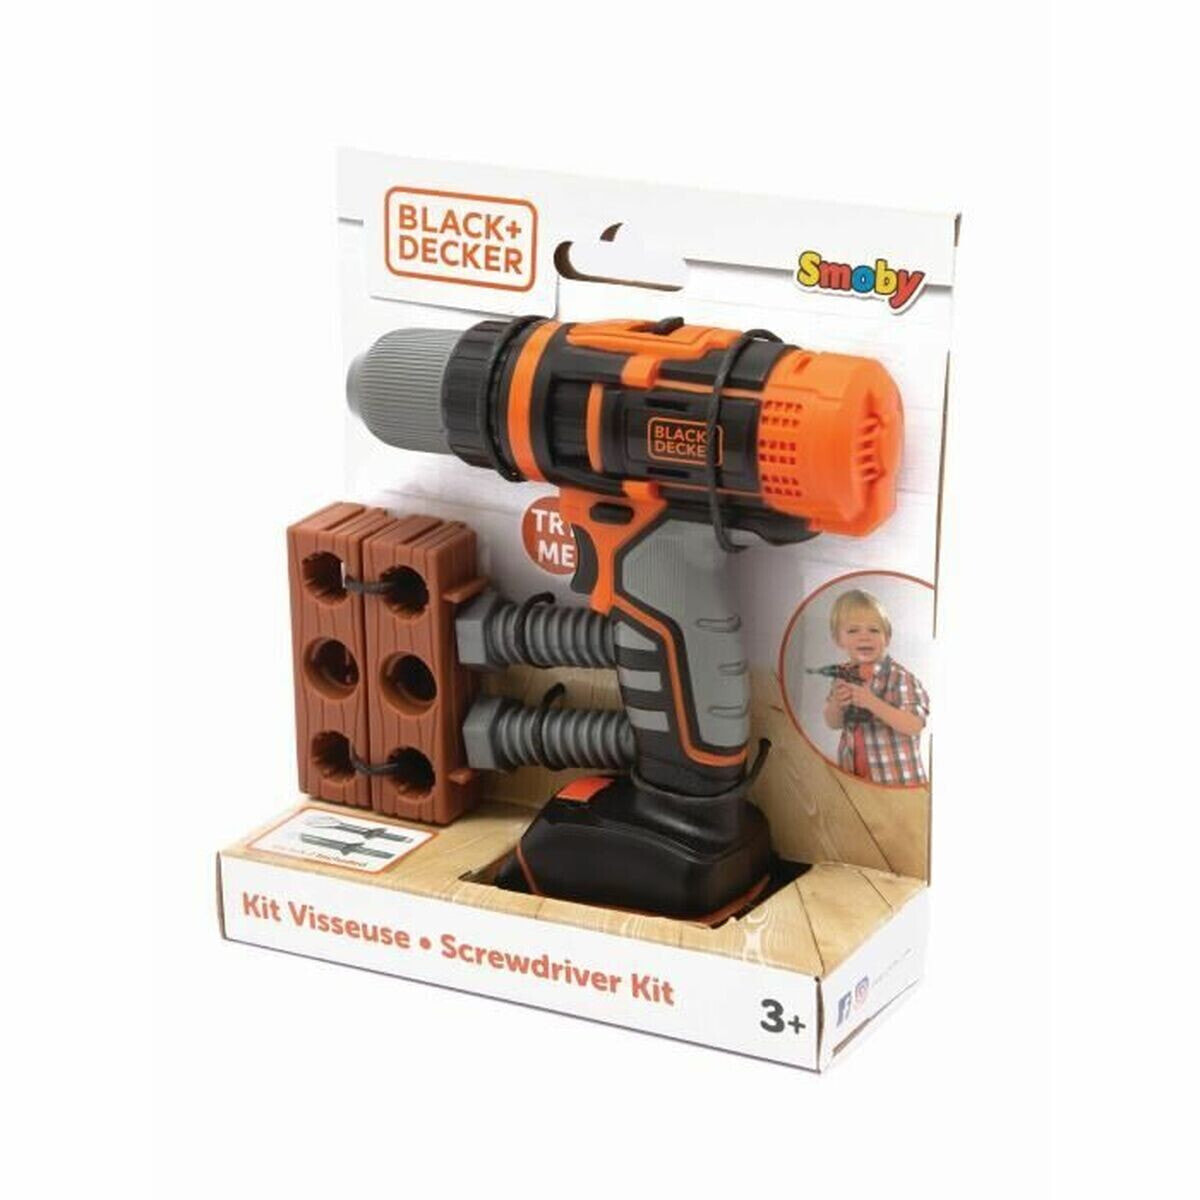 Toy drill Smoby Black + Decker